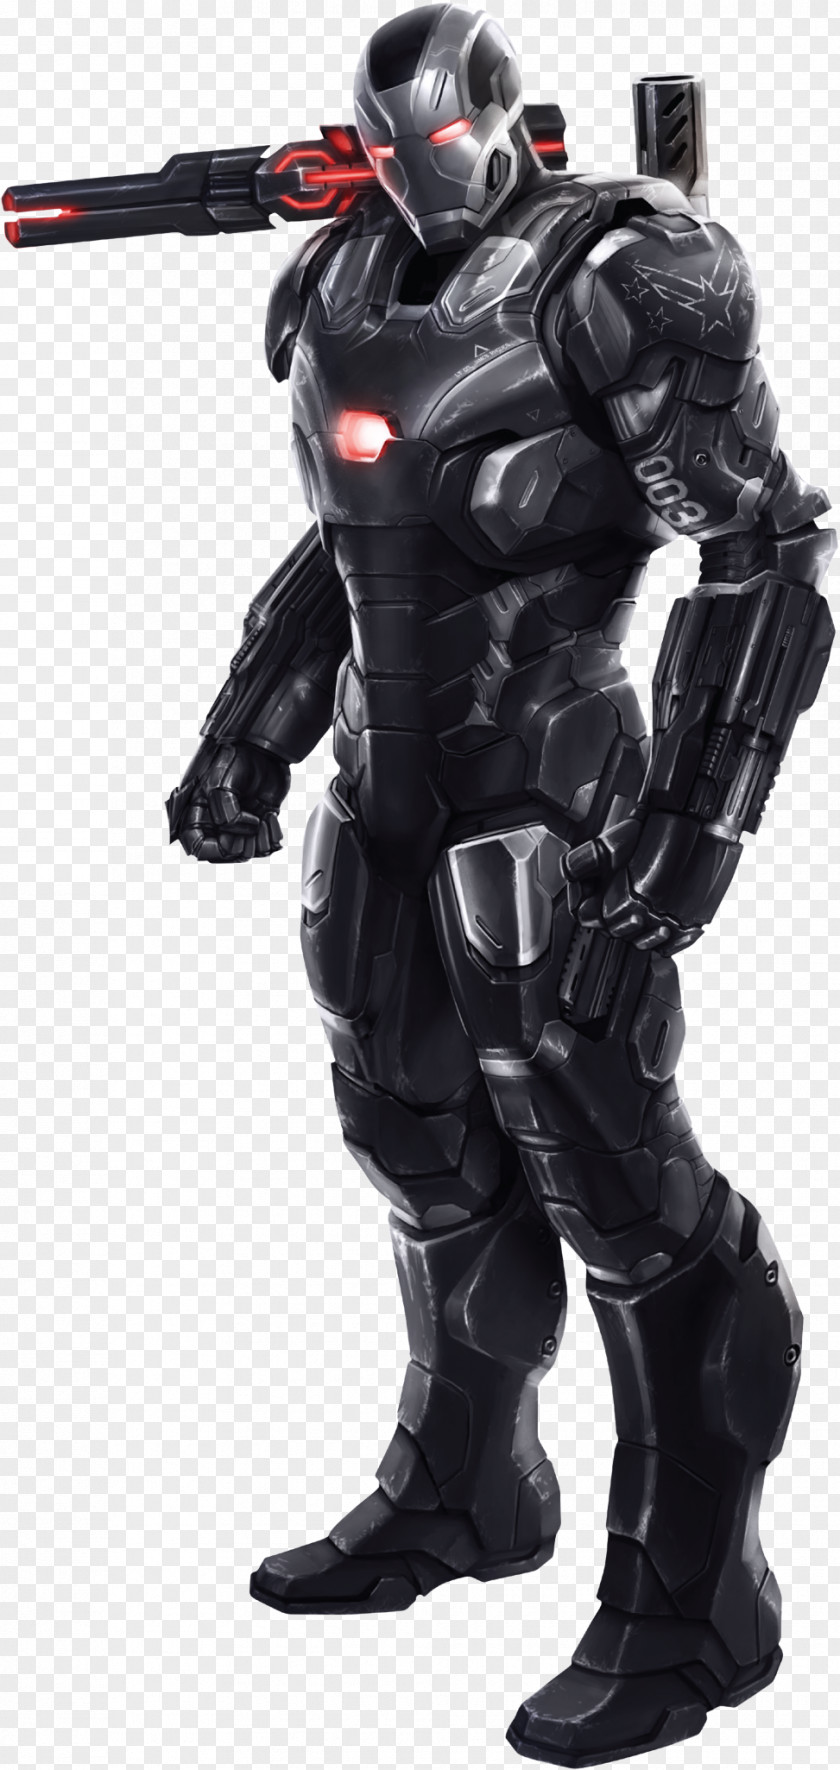 Thanos War Machine Iron Man Captain America Ant-Man United States PNG